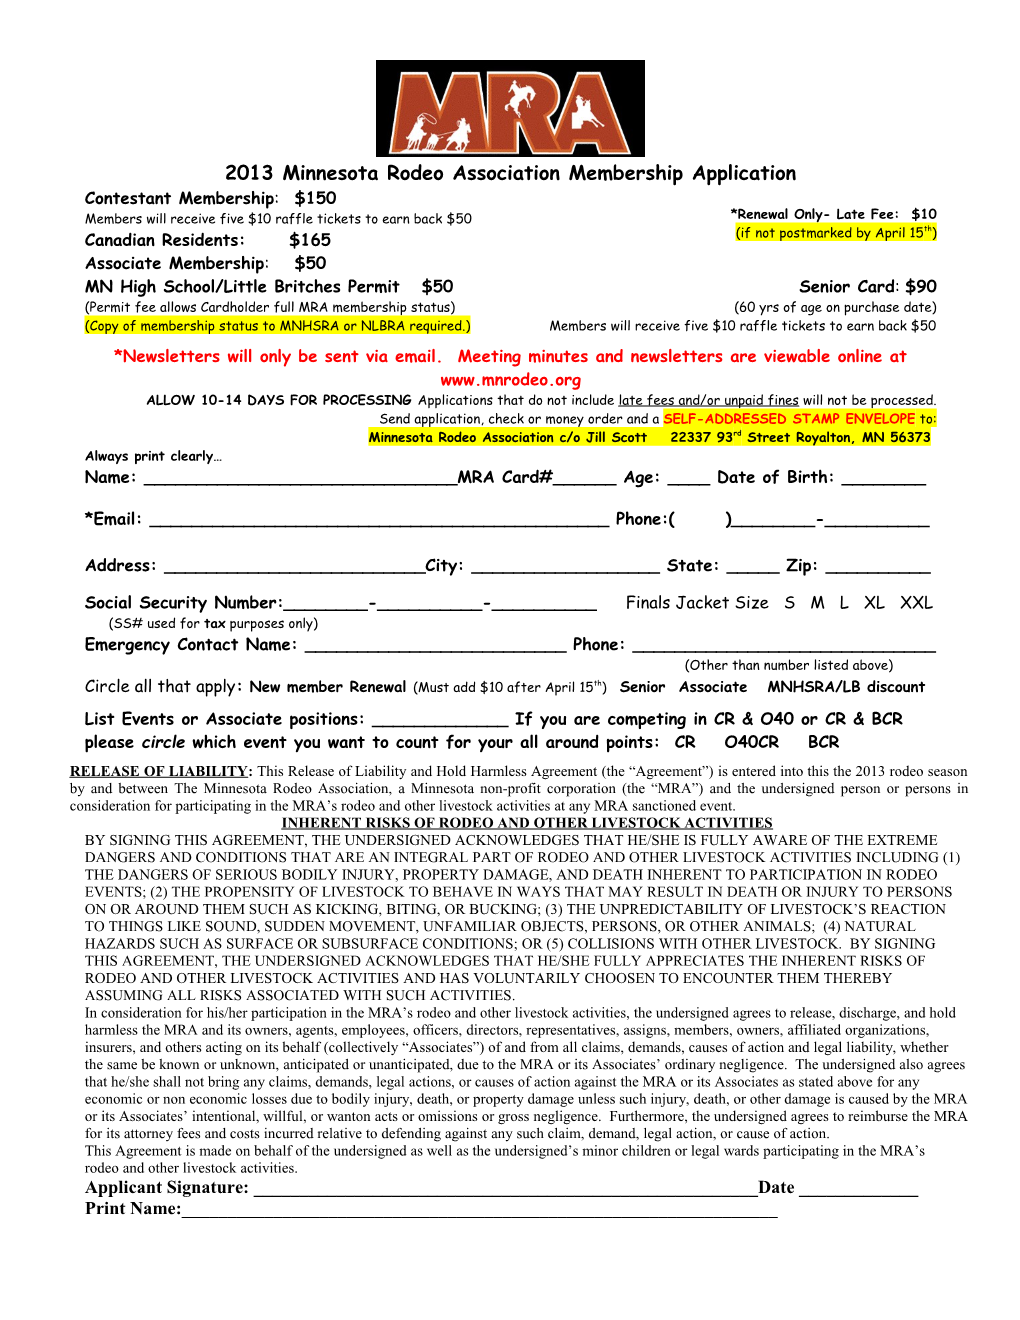 2001 Minnesota Rodeo Association Application